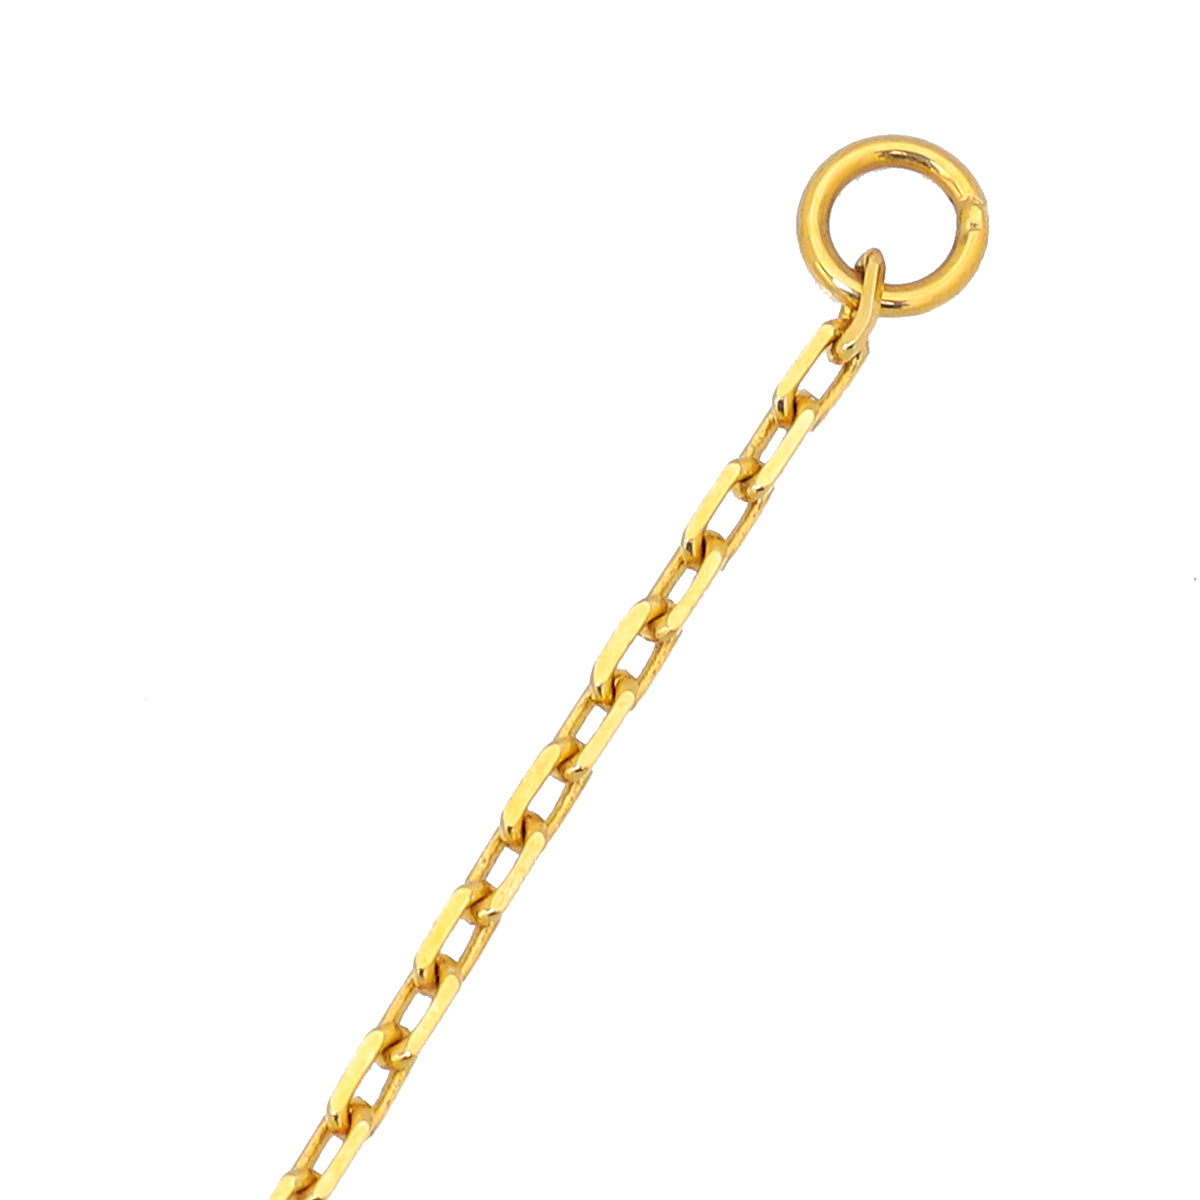 Boucheron 18K Tricolor Gold Diamond Quatre Red Edition Mini Ring Pendant Necklace